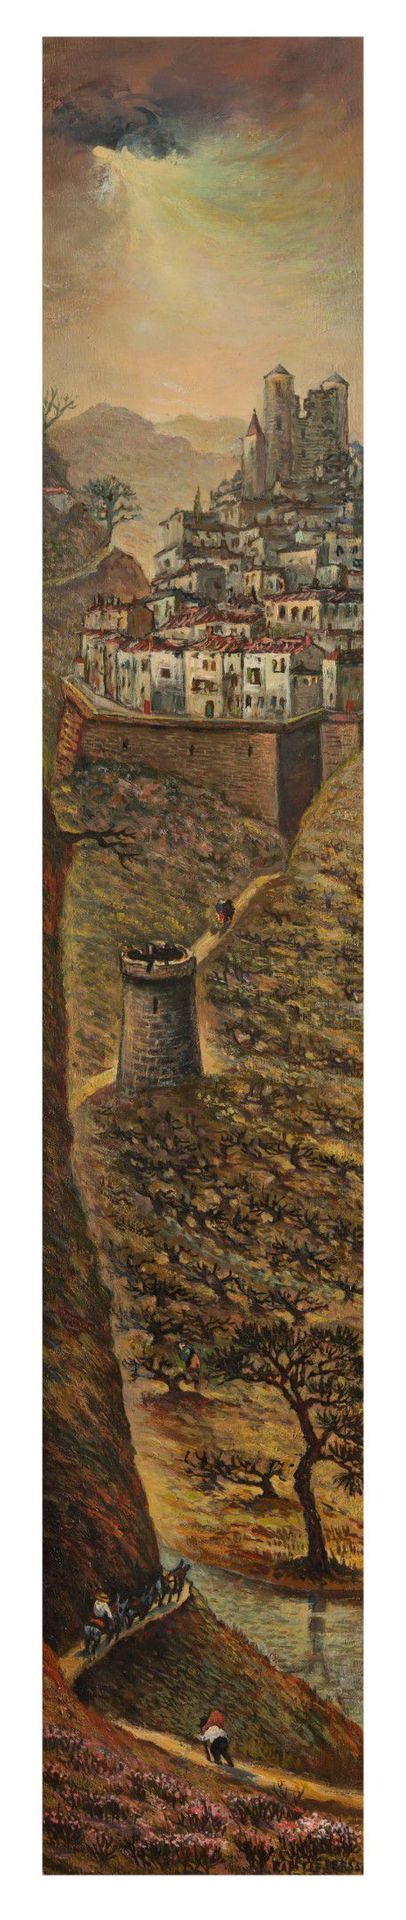 Null 让-拉菲-勒-佩尔桑 (1920 - 2008)

强化的村庄

板面油画，右下角有签名

79 x 15 cm